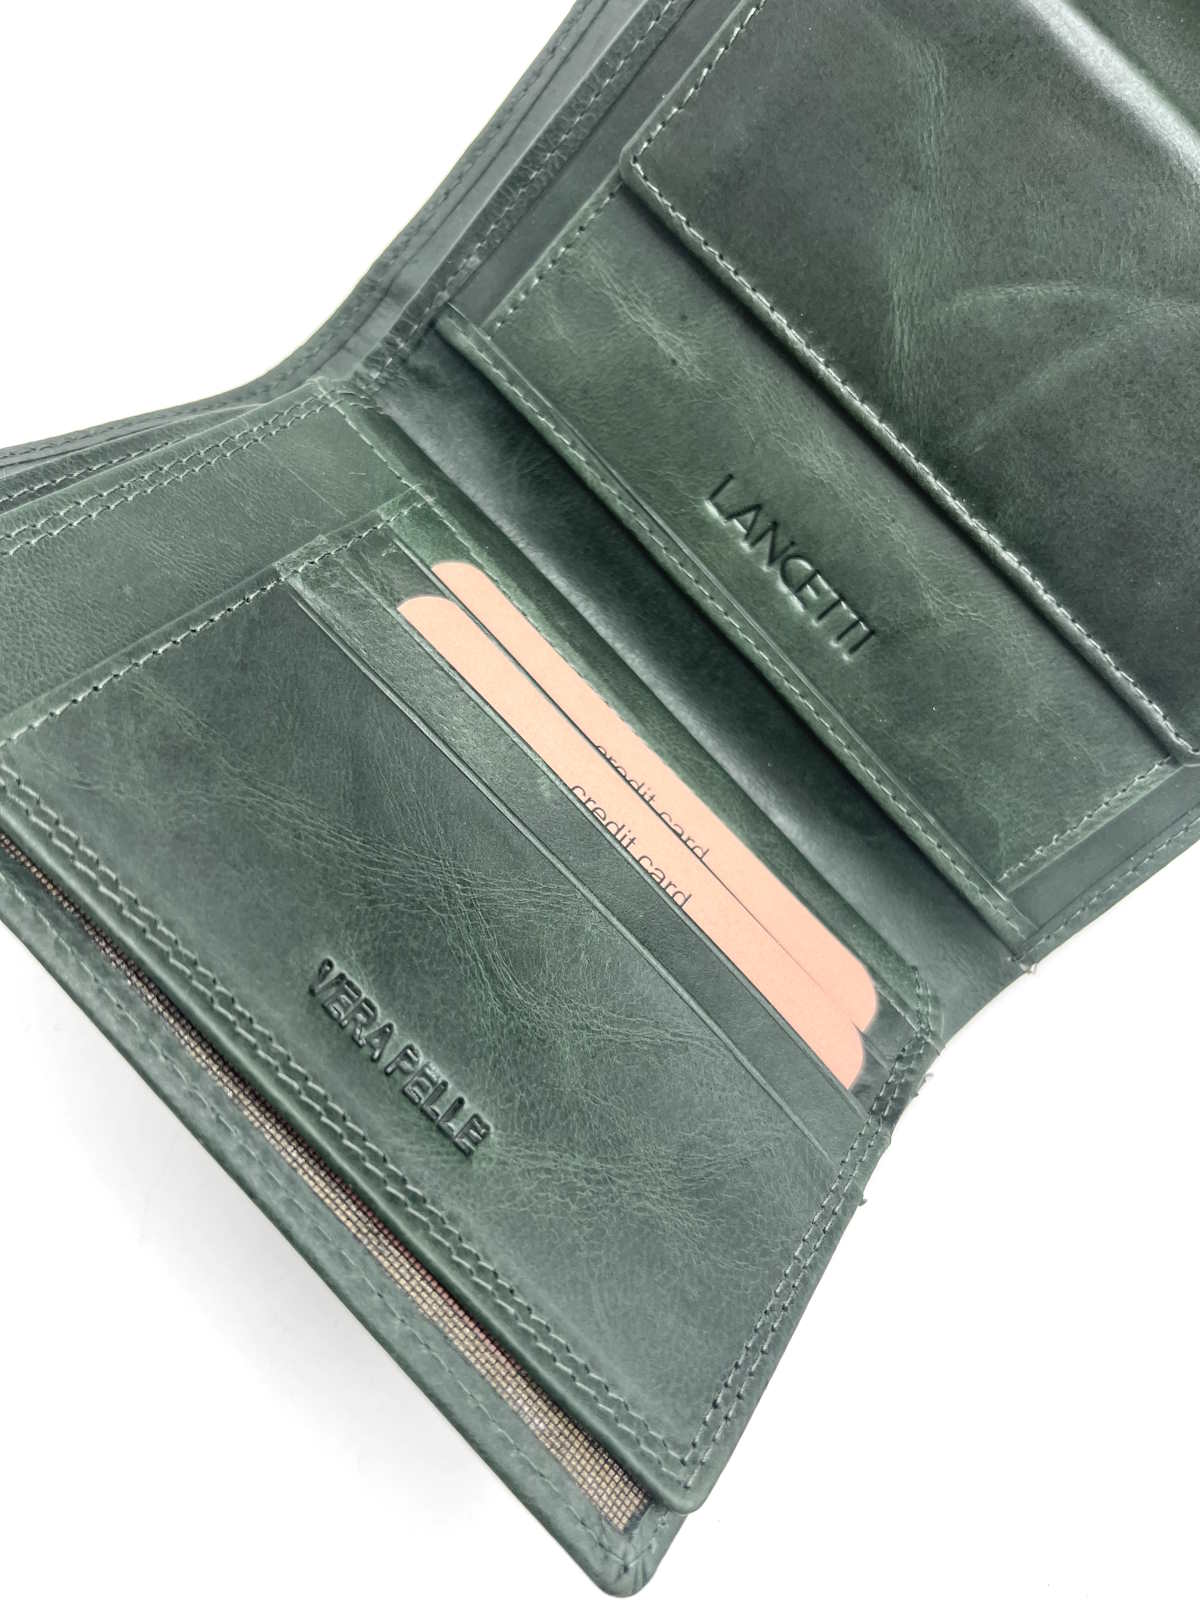 Genuine leather wallet, Brand Lancetti, art. LL23765-31